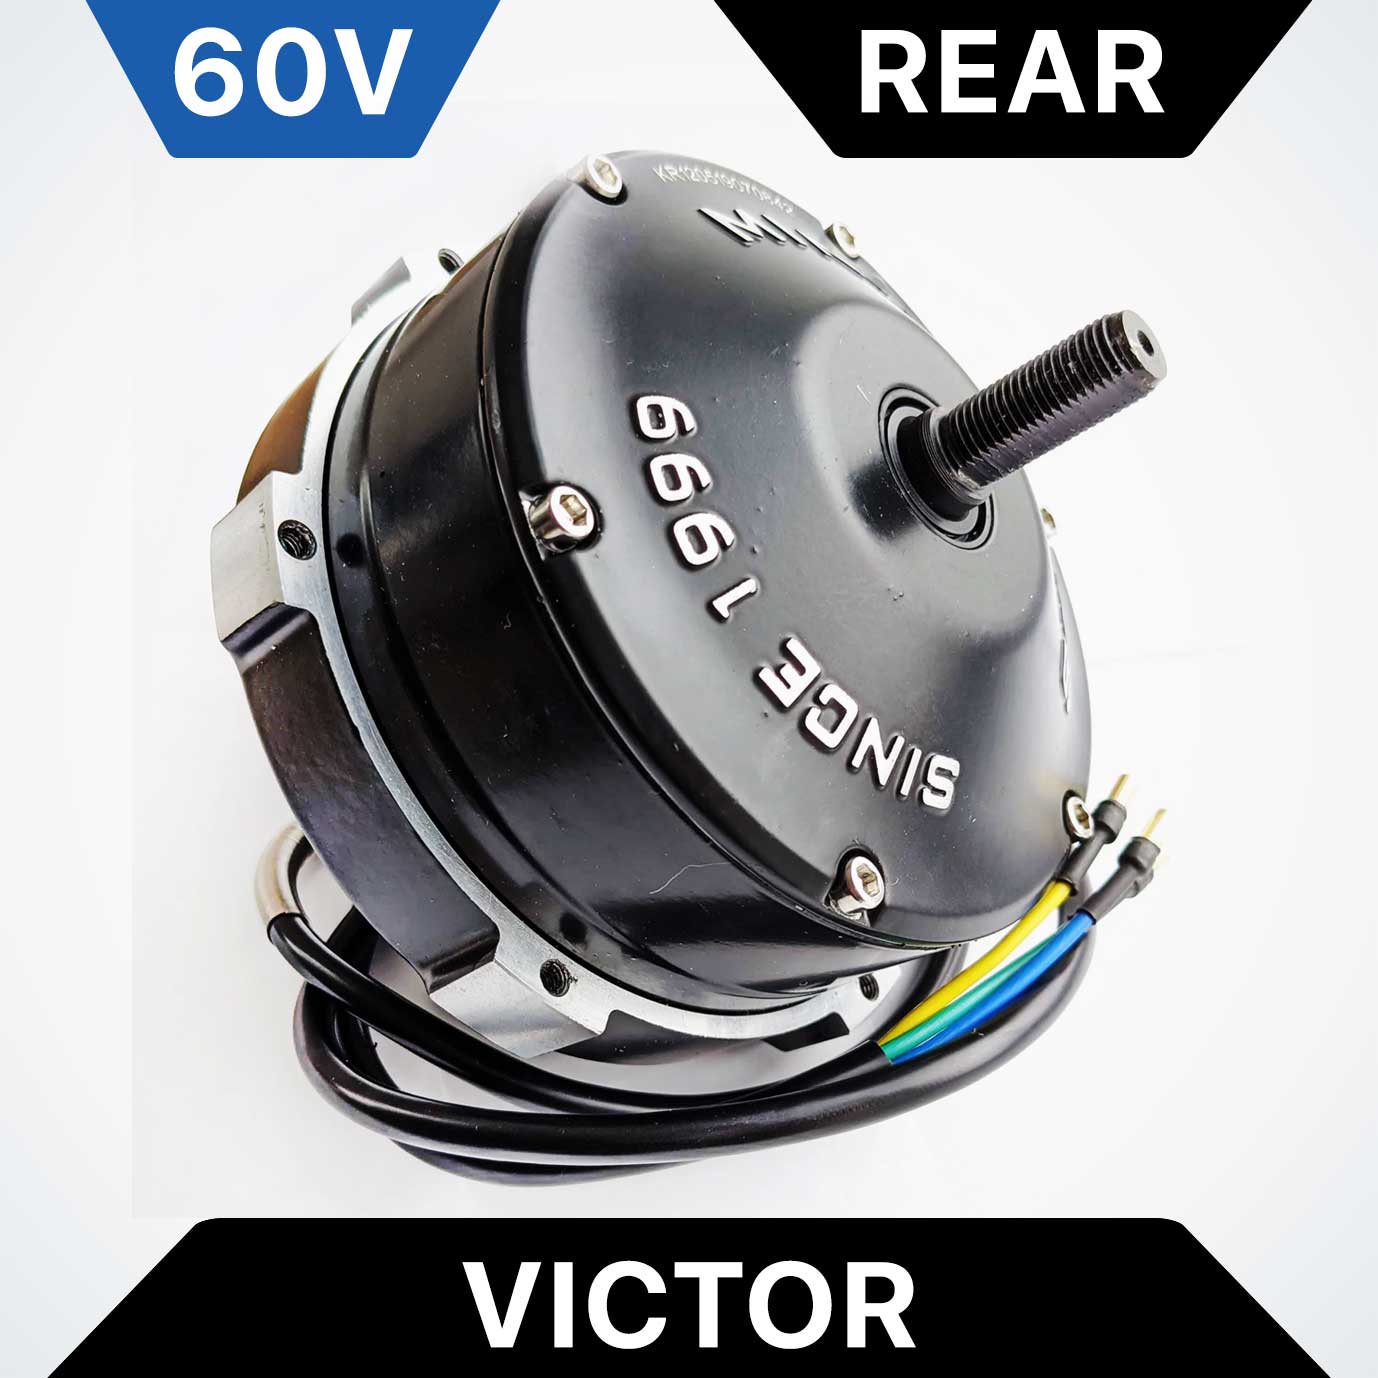 Rear Motor for Dualtron Victor - 60V